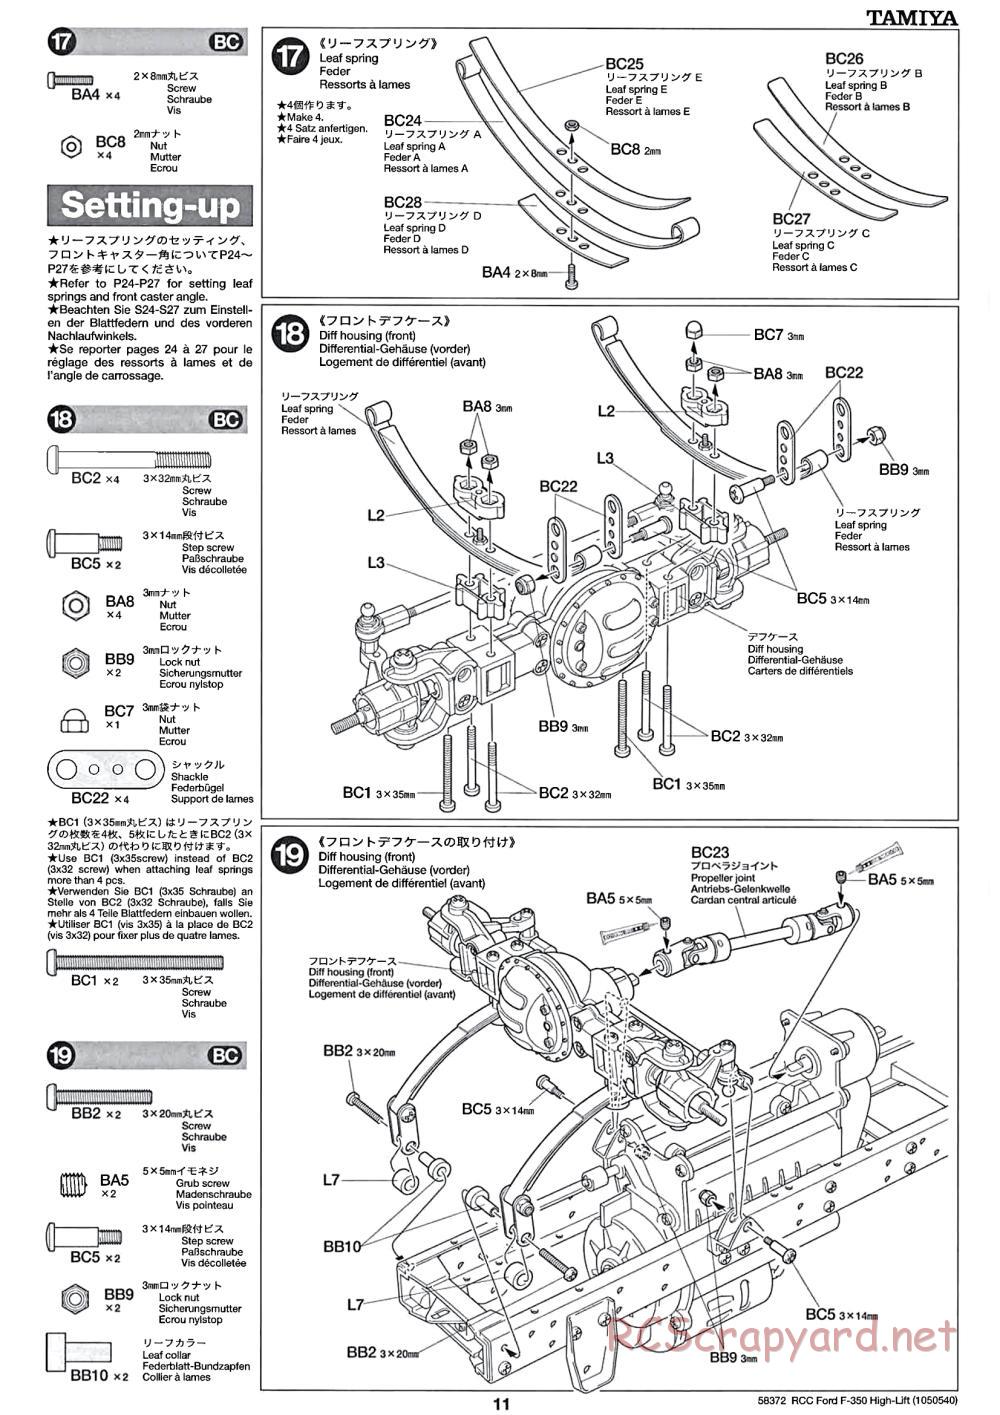 Tamiya - Ford F350 High-Lift Chassis - Manual - Page 11